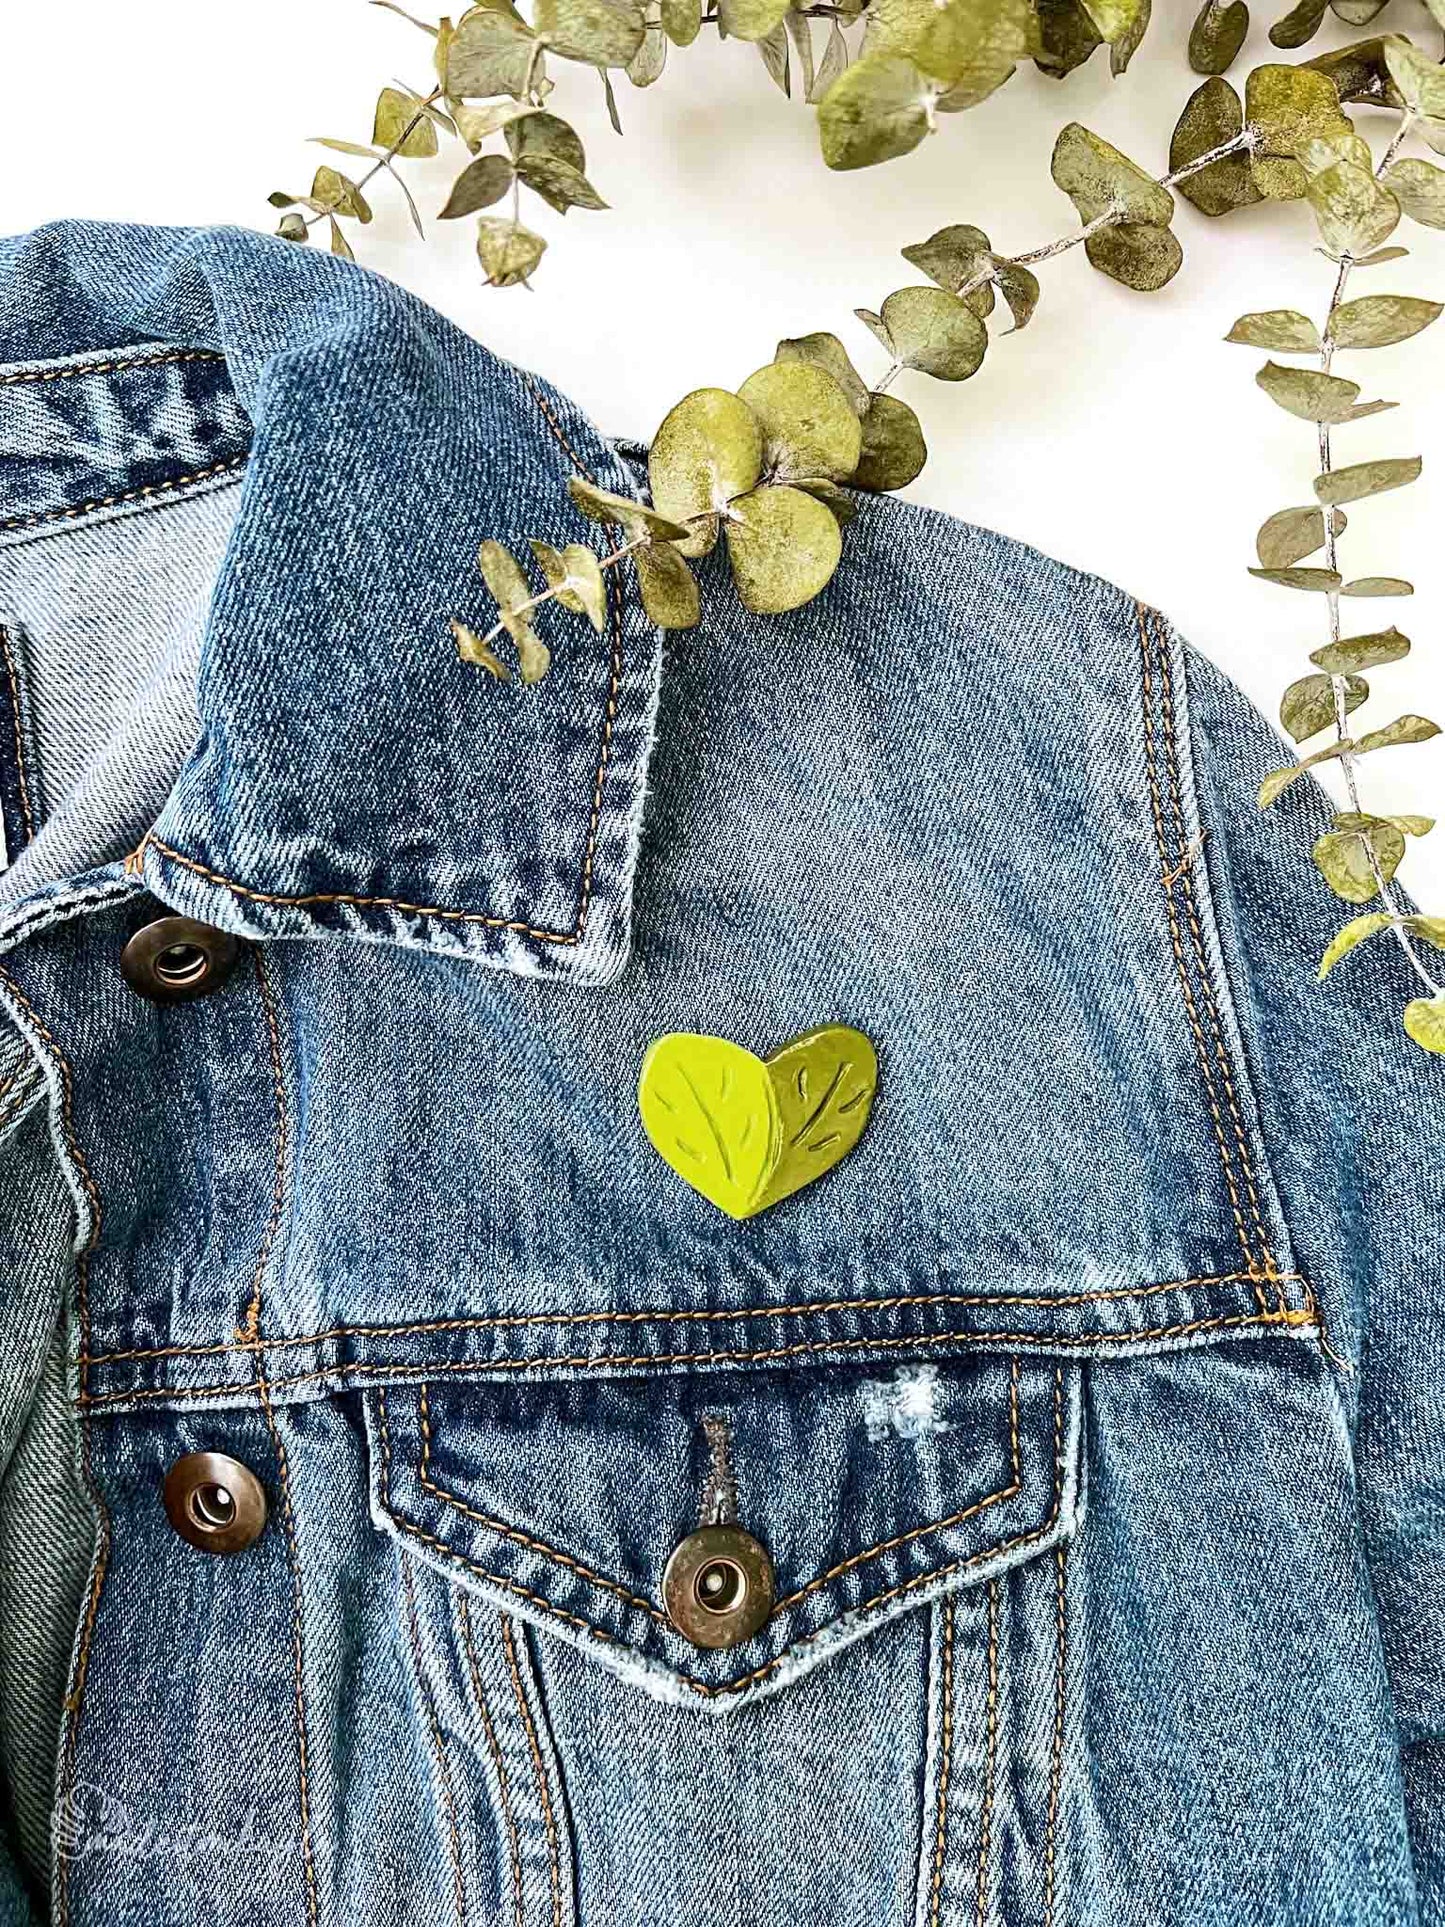 Heart Leaf Clay Pin | MadeItMikayla